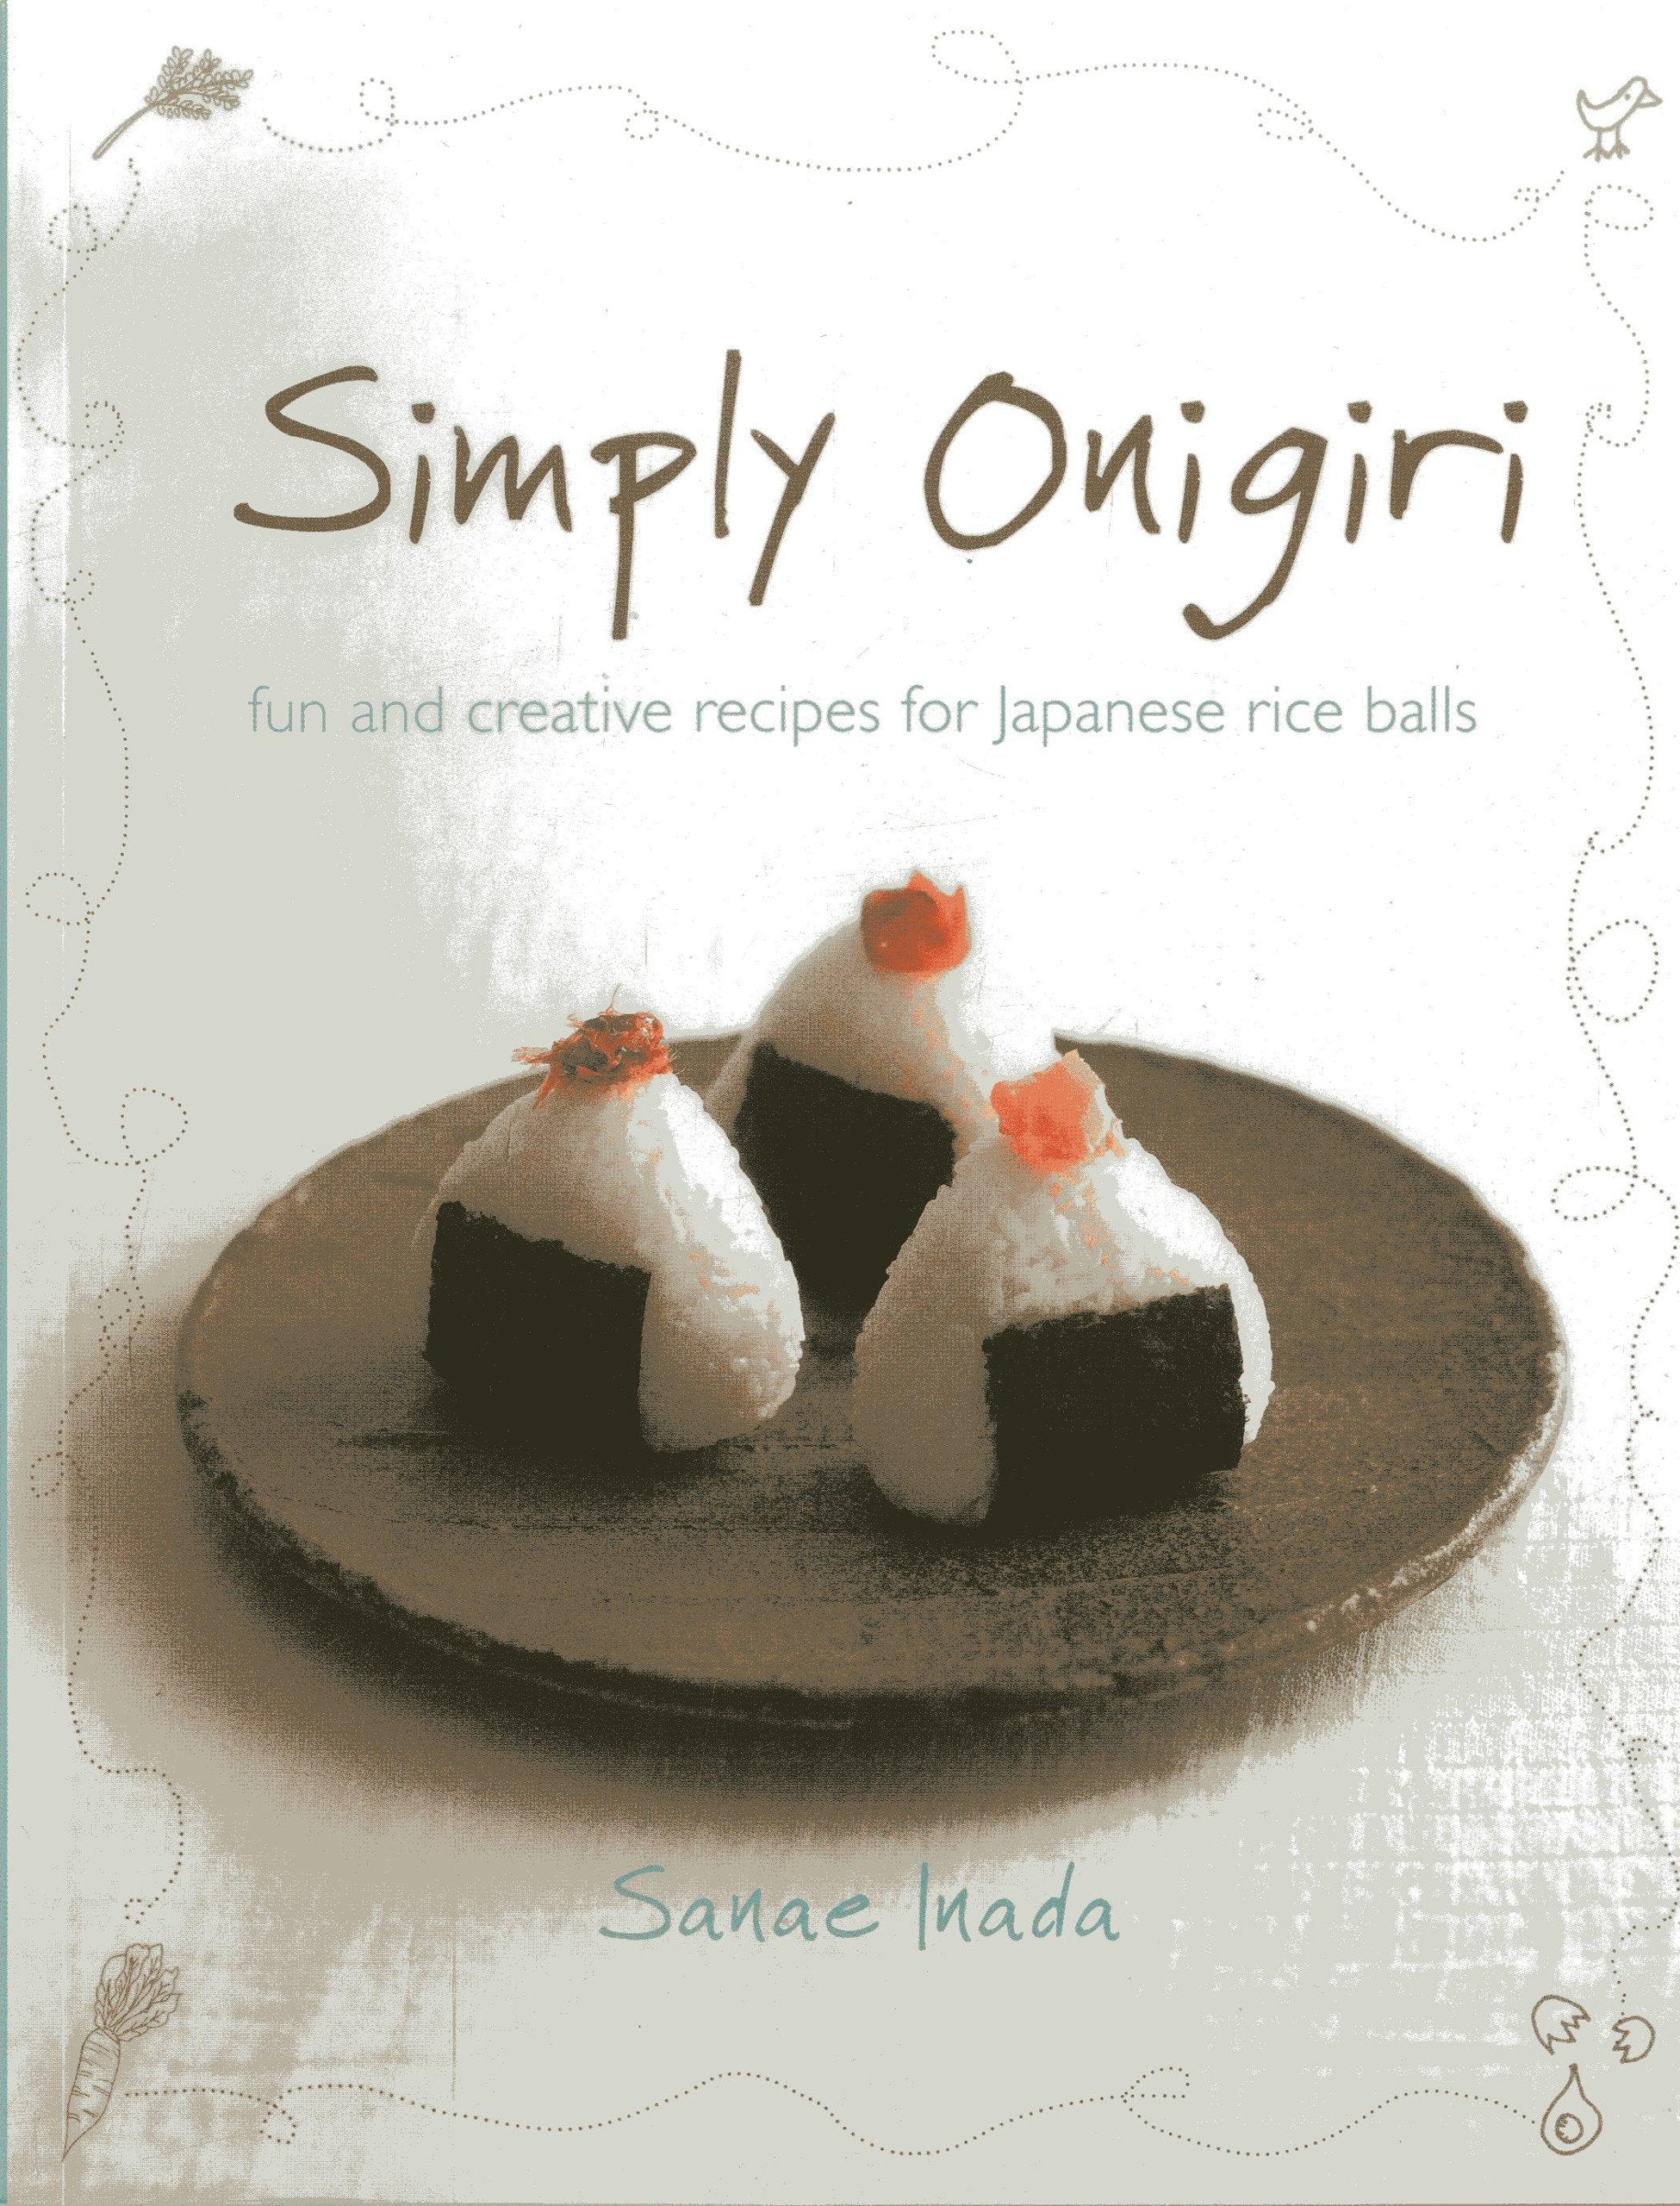 Simply Onigiri: Fun & Creative Recipes for Japanese Rice Balls (Sanae Inada)